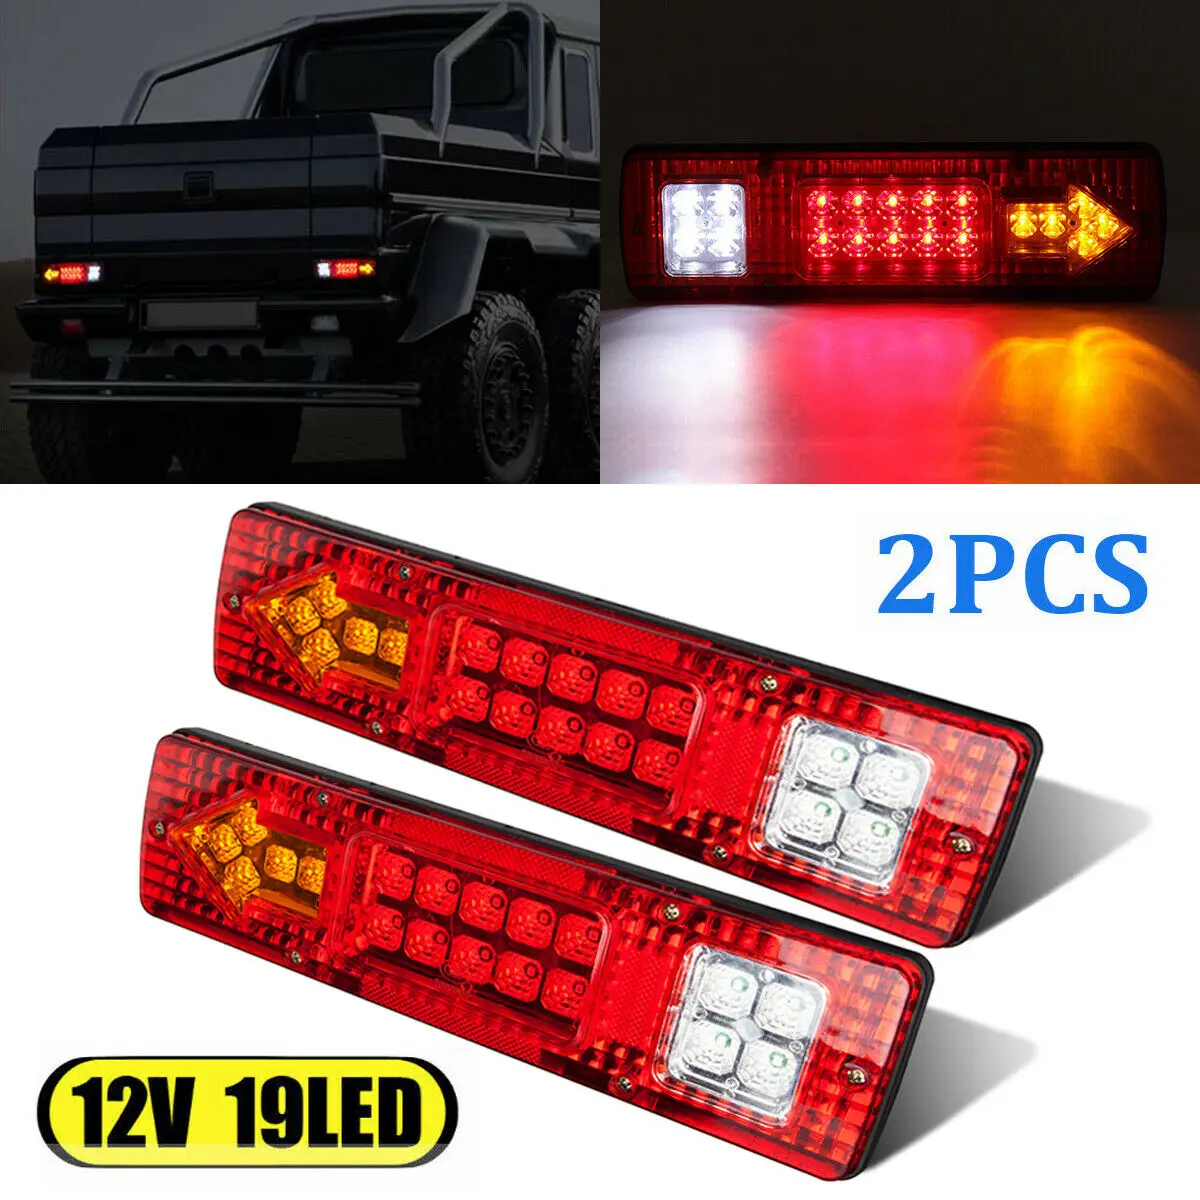 2pcs LED Waterproof Waning Turn Signal Tail Lights Kit For Camper Trailer Truck LED lamp